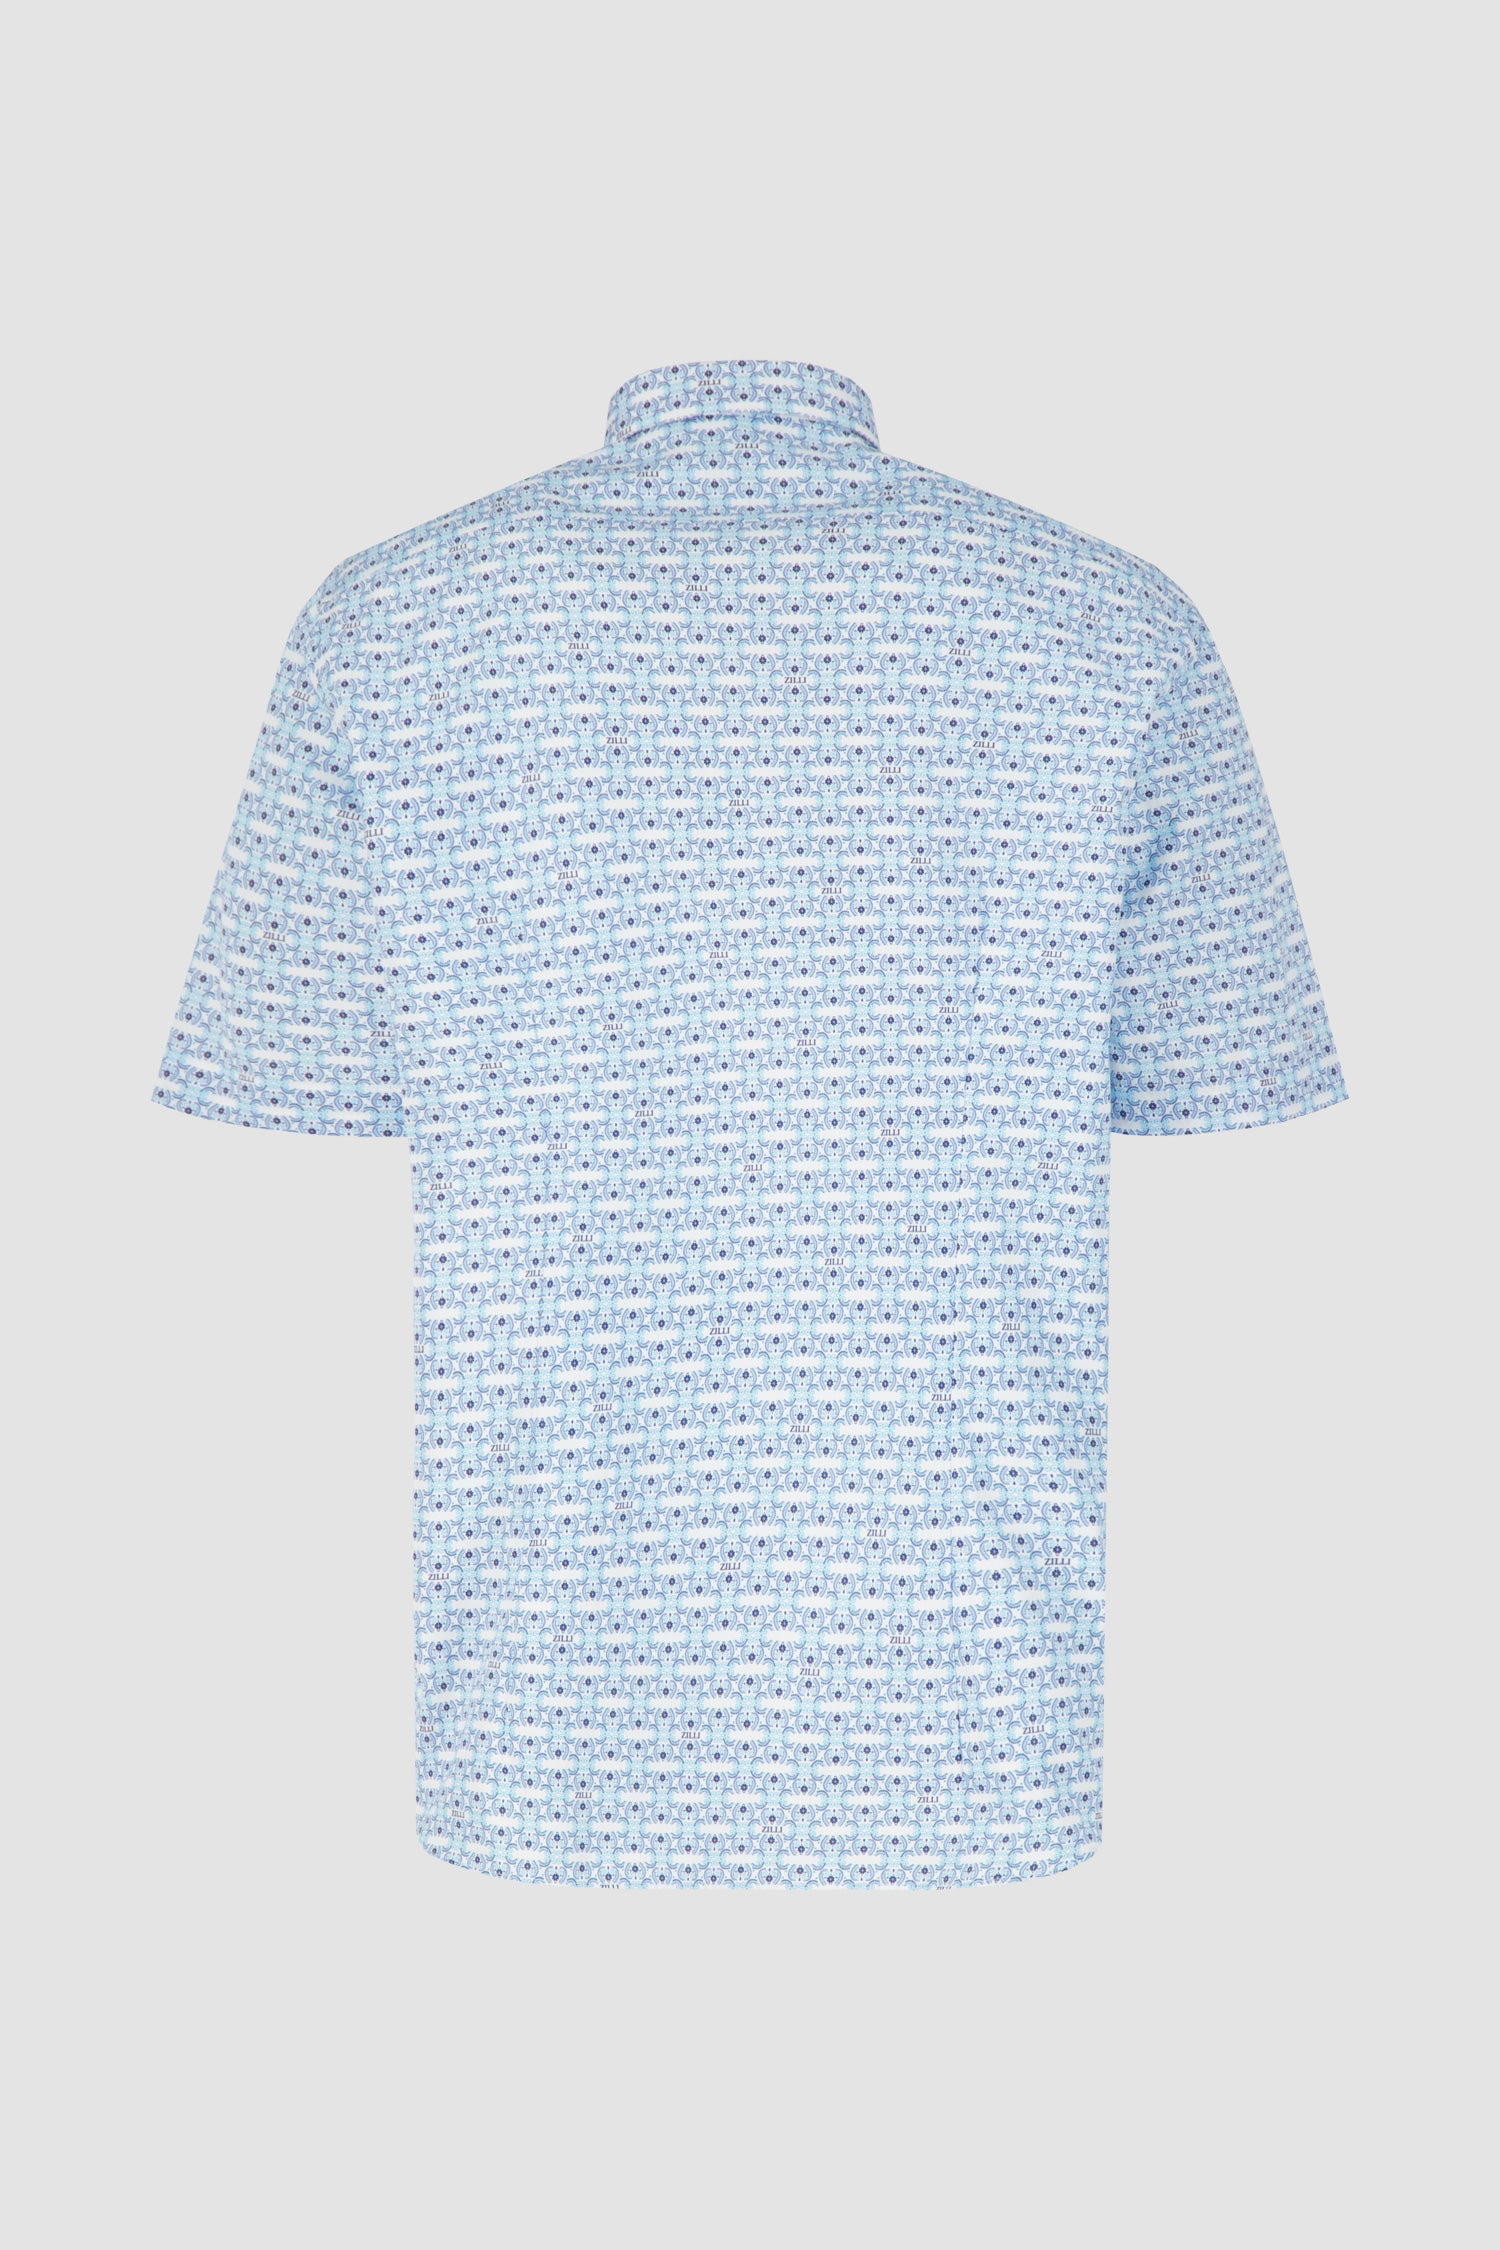 Zilli Blue/White Short Sleeve Shirt